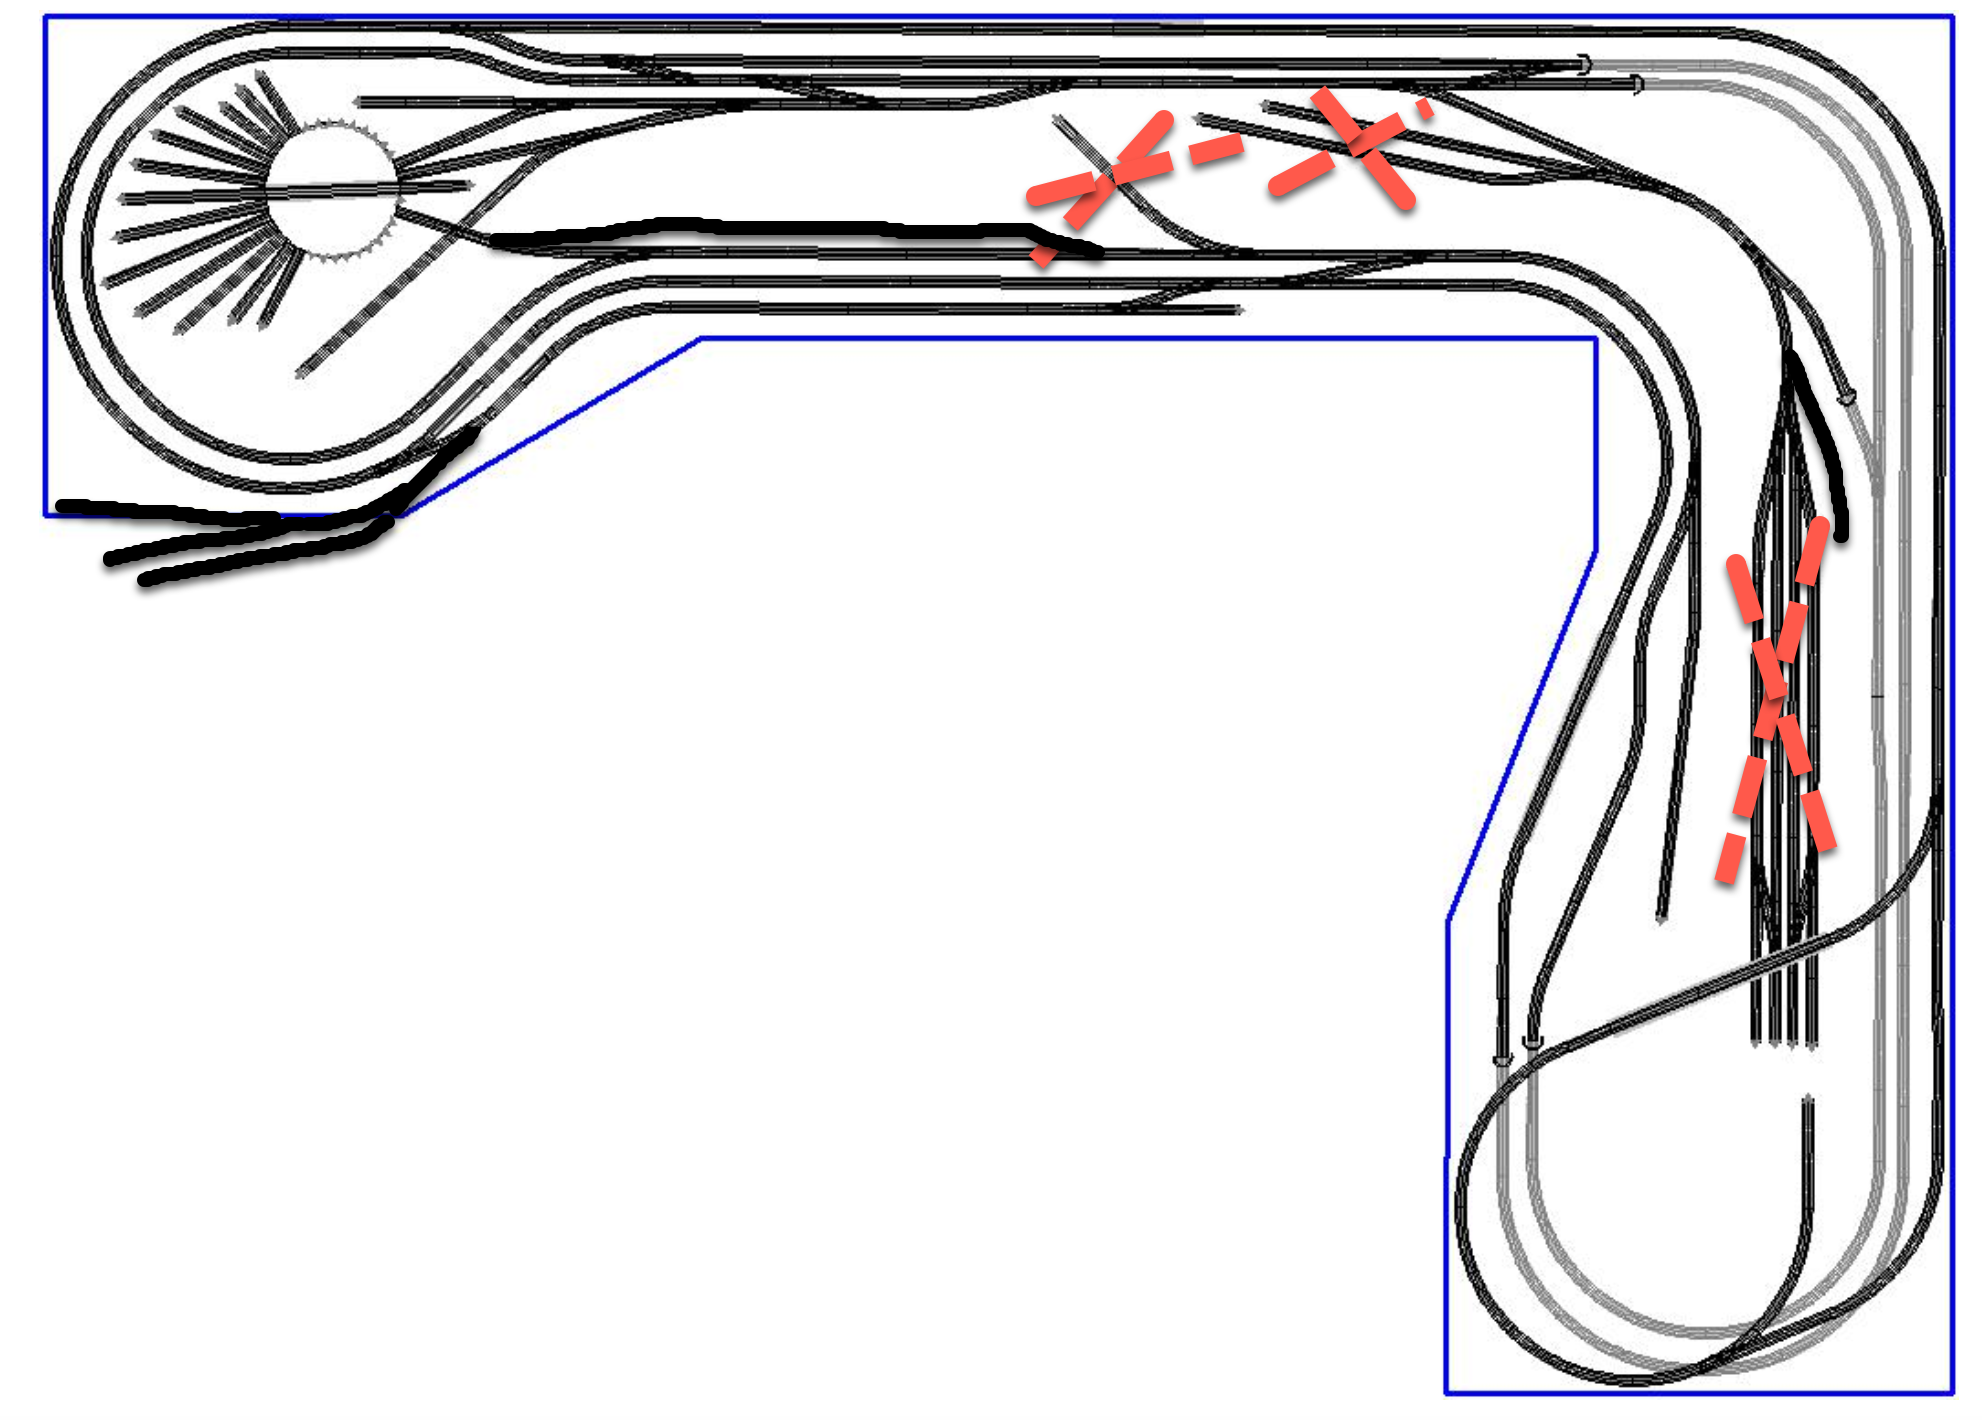 Model train layout diagram